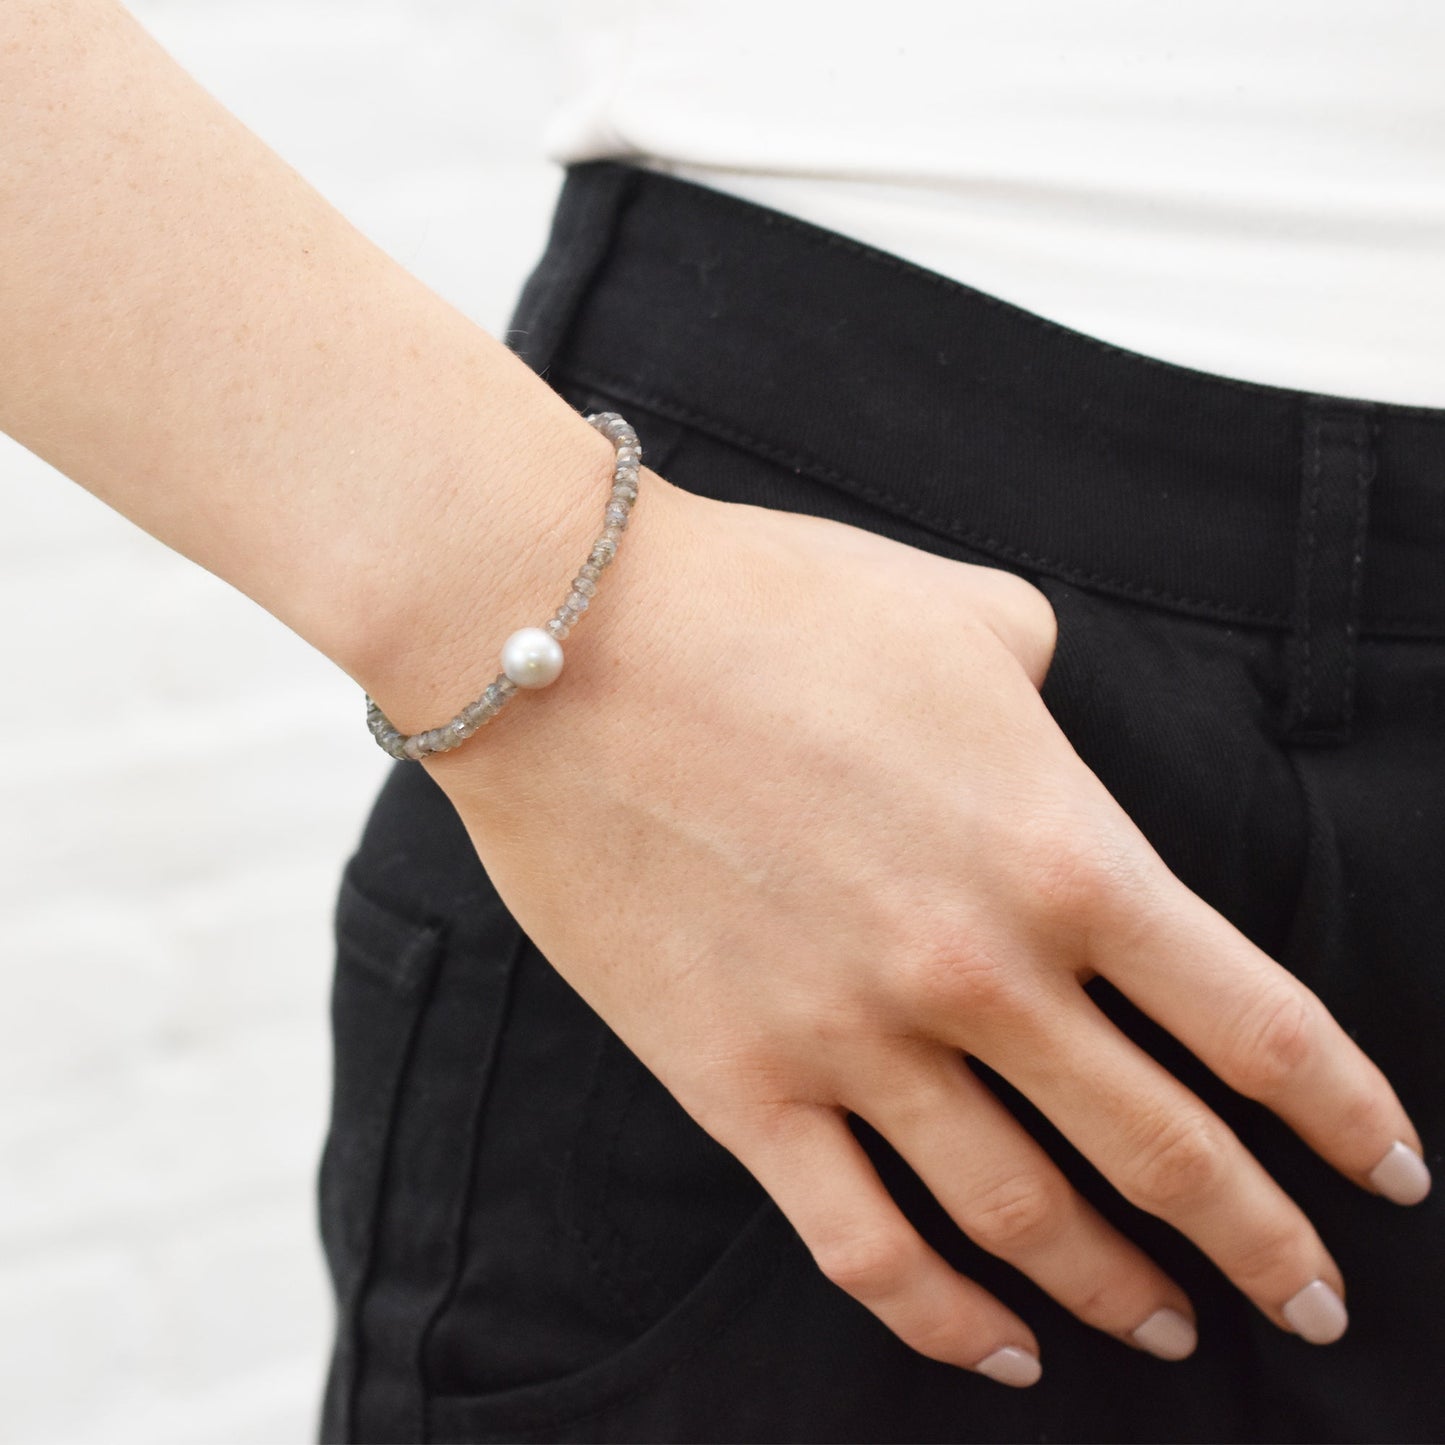 14k Labradorite Silver Grey Freshwater Pearl Bracelet